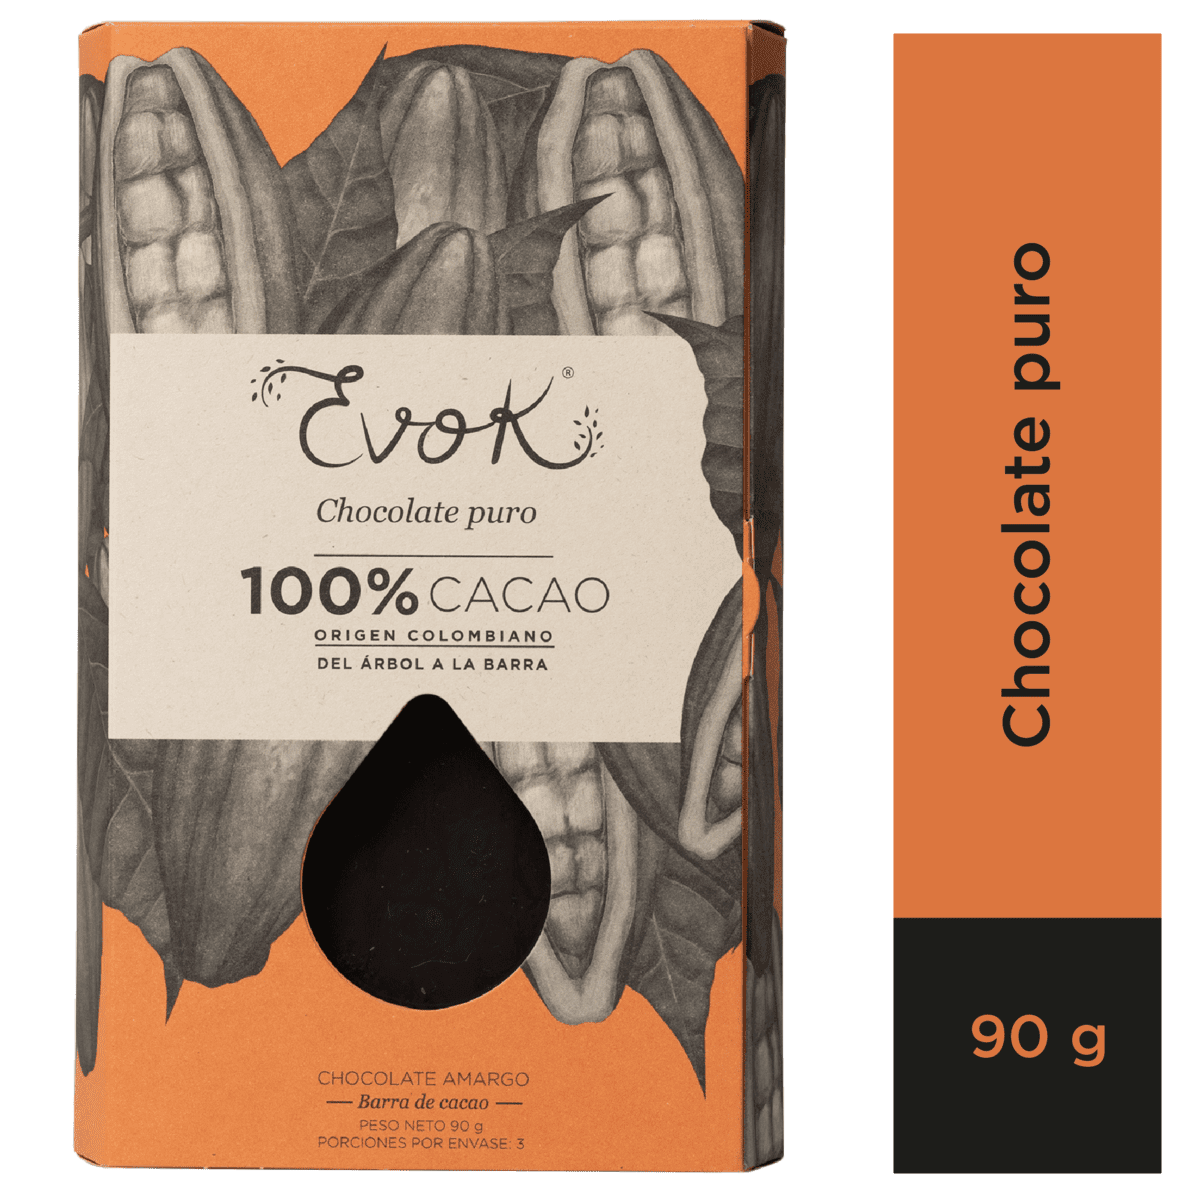 https://www.evok.com.co/wp-content/uploads/2020/09/cacao1001.png